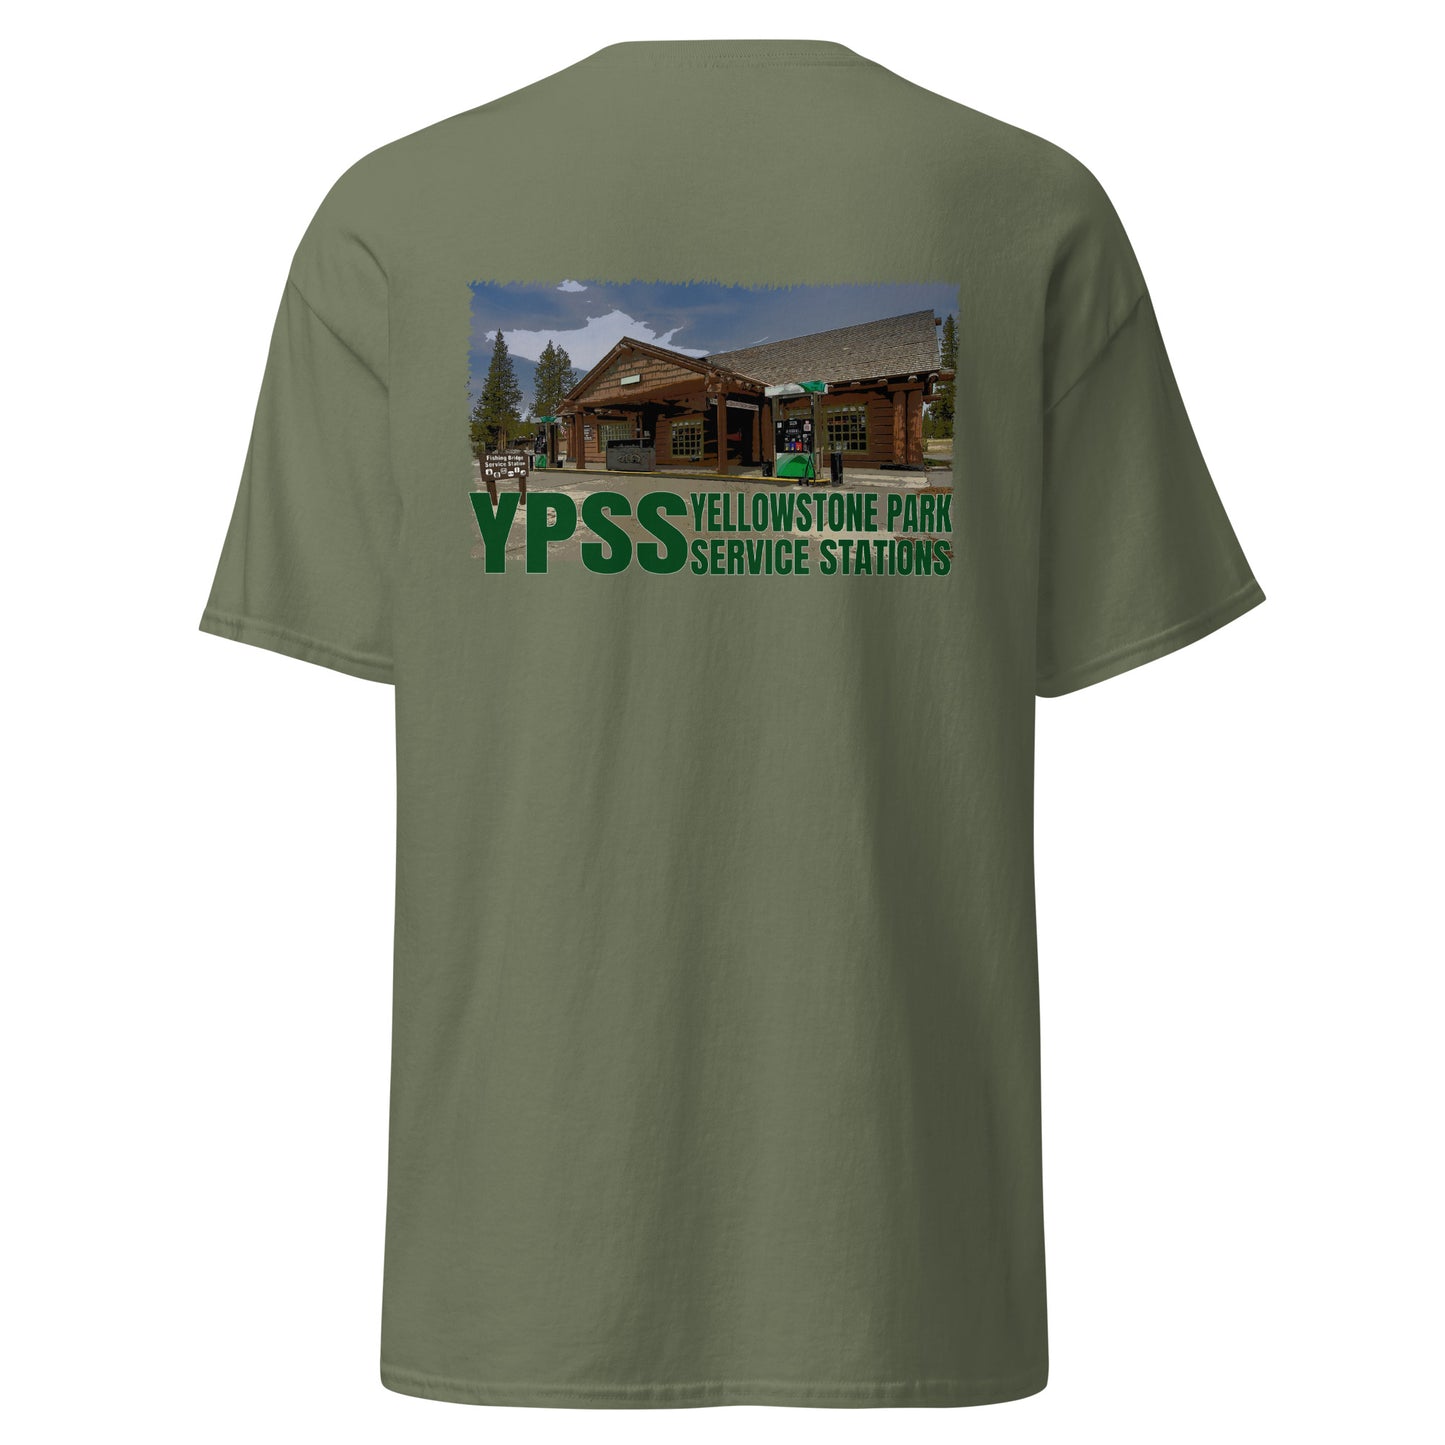 YPSS Yellowstone Park Service Stations - Fishing Bridge Station - Classic Tee